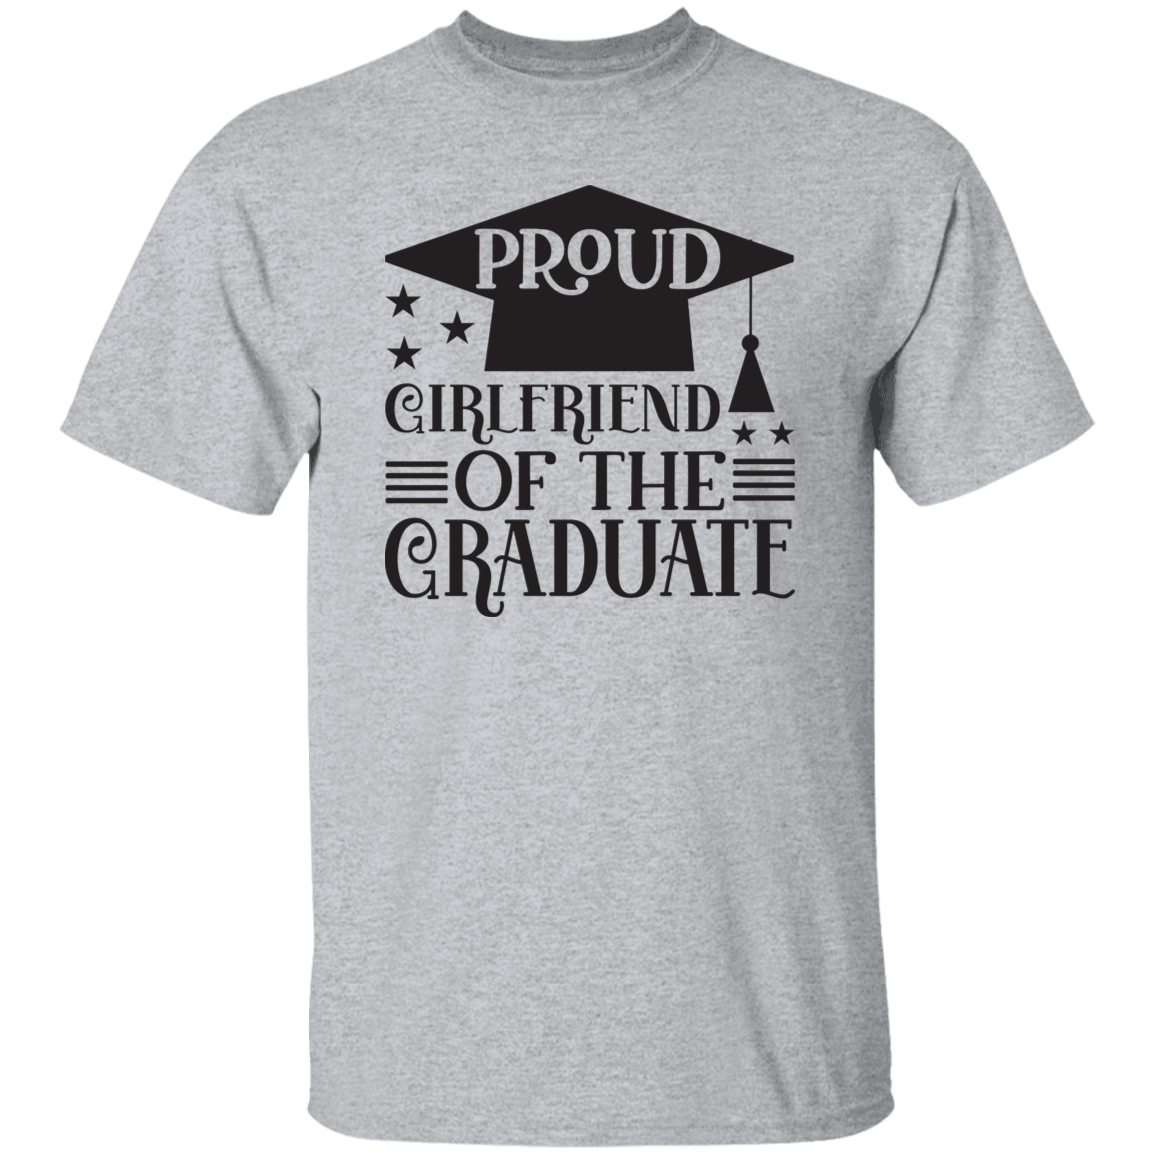 Proud Girlfriend of the Graduate G500 5.3 oz. T-Shirt